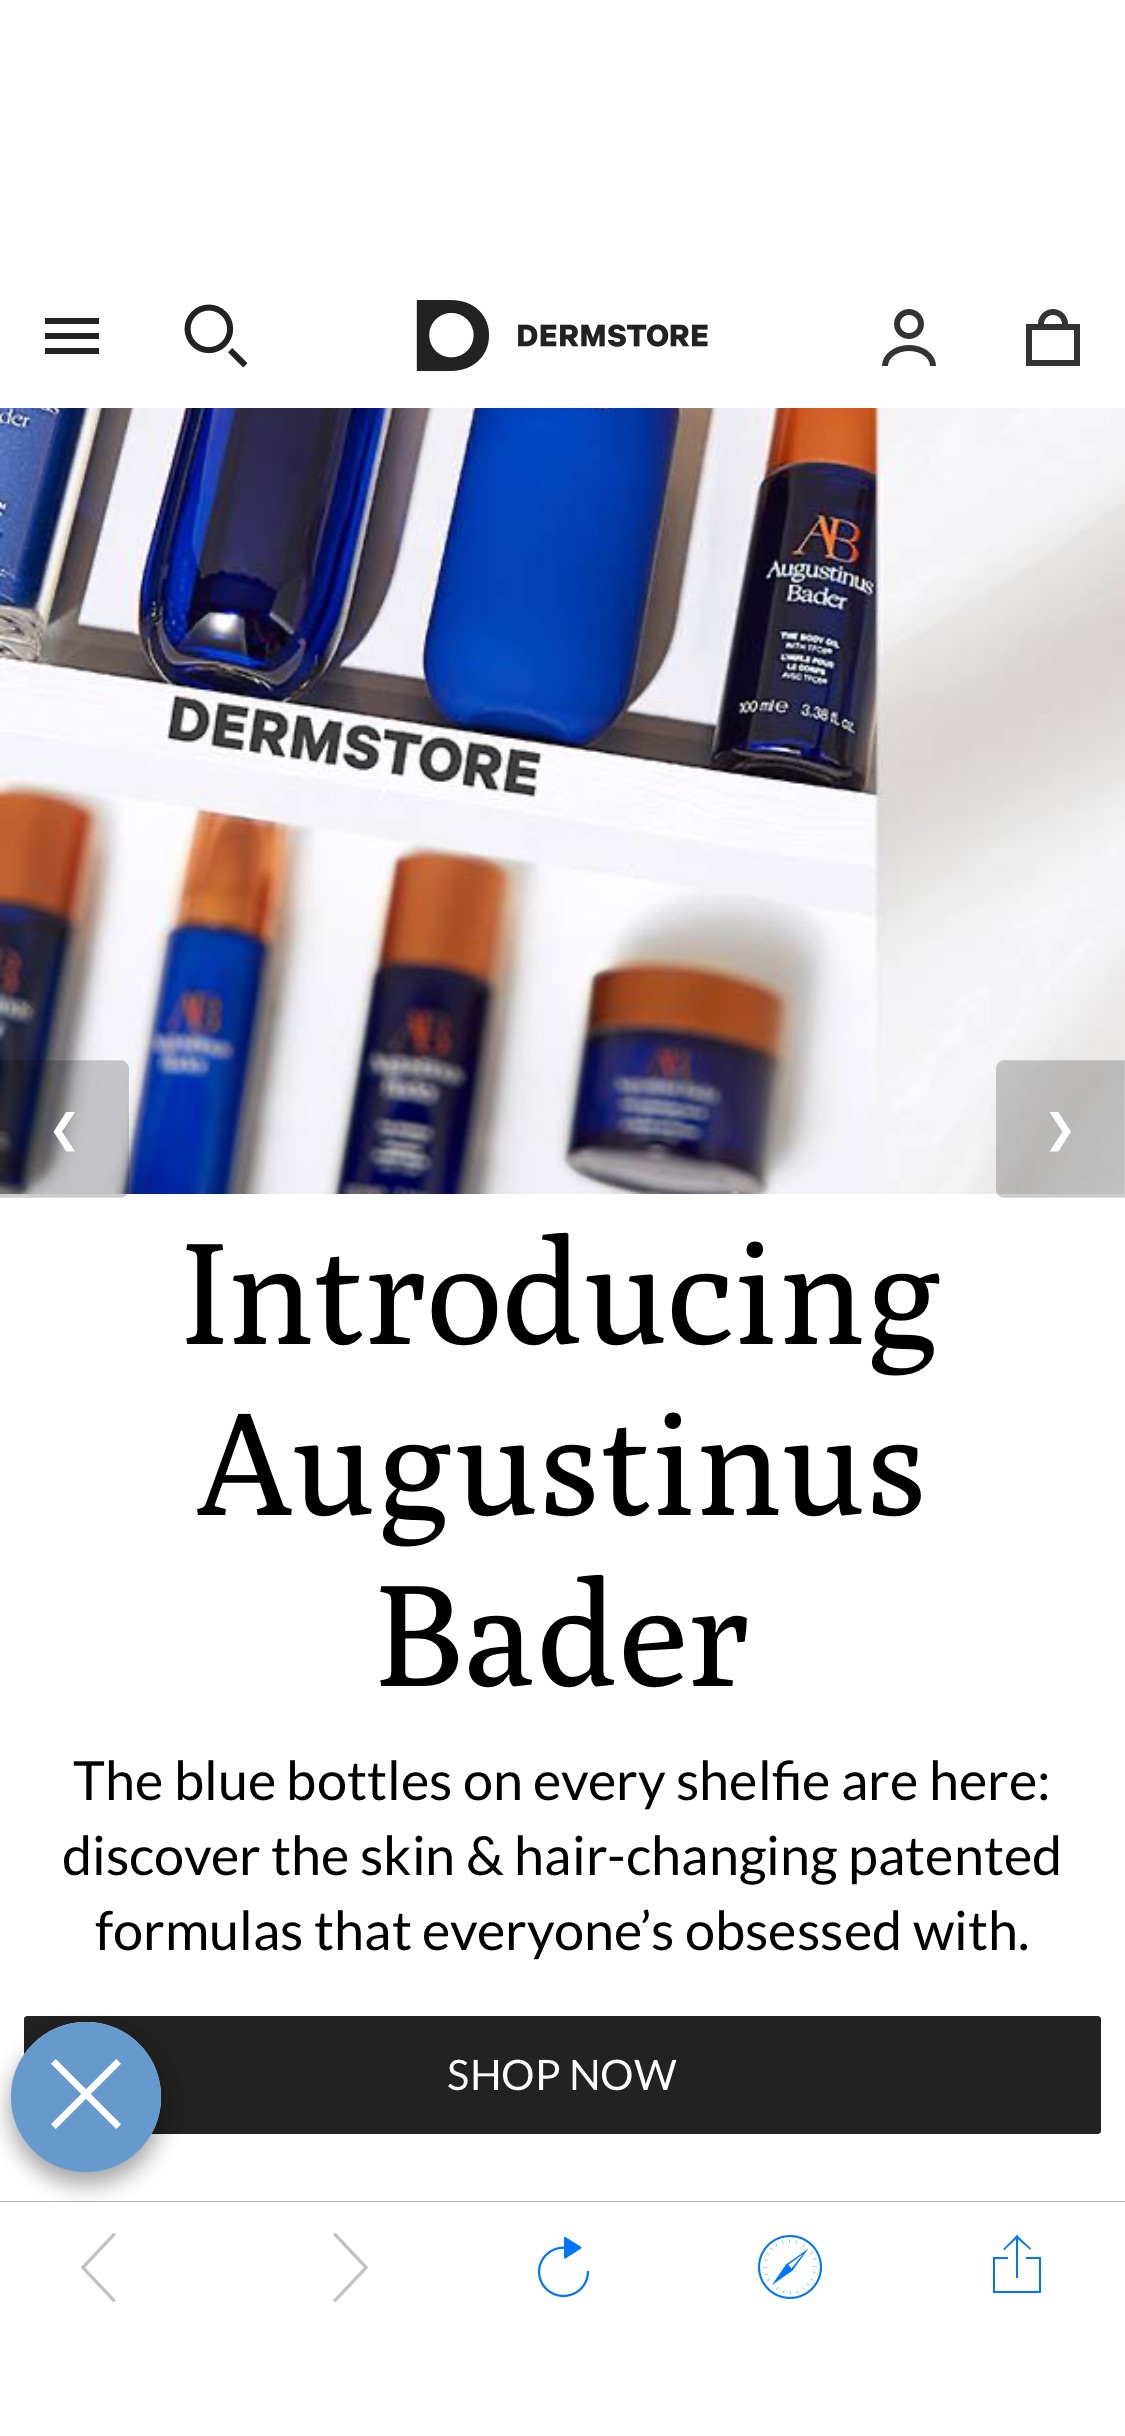 Dermstore | Skin Care Website for Beauty Products Online
最佳护肤套装低至3.5折，包括防晒套装、换肤套装和抗皱套装